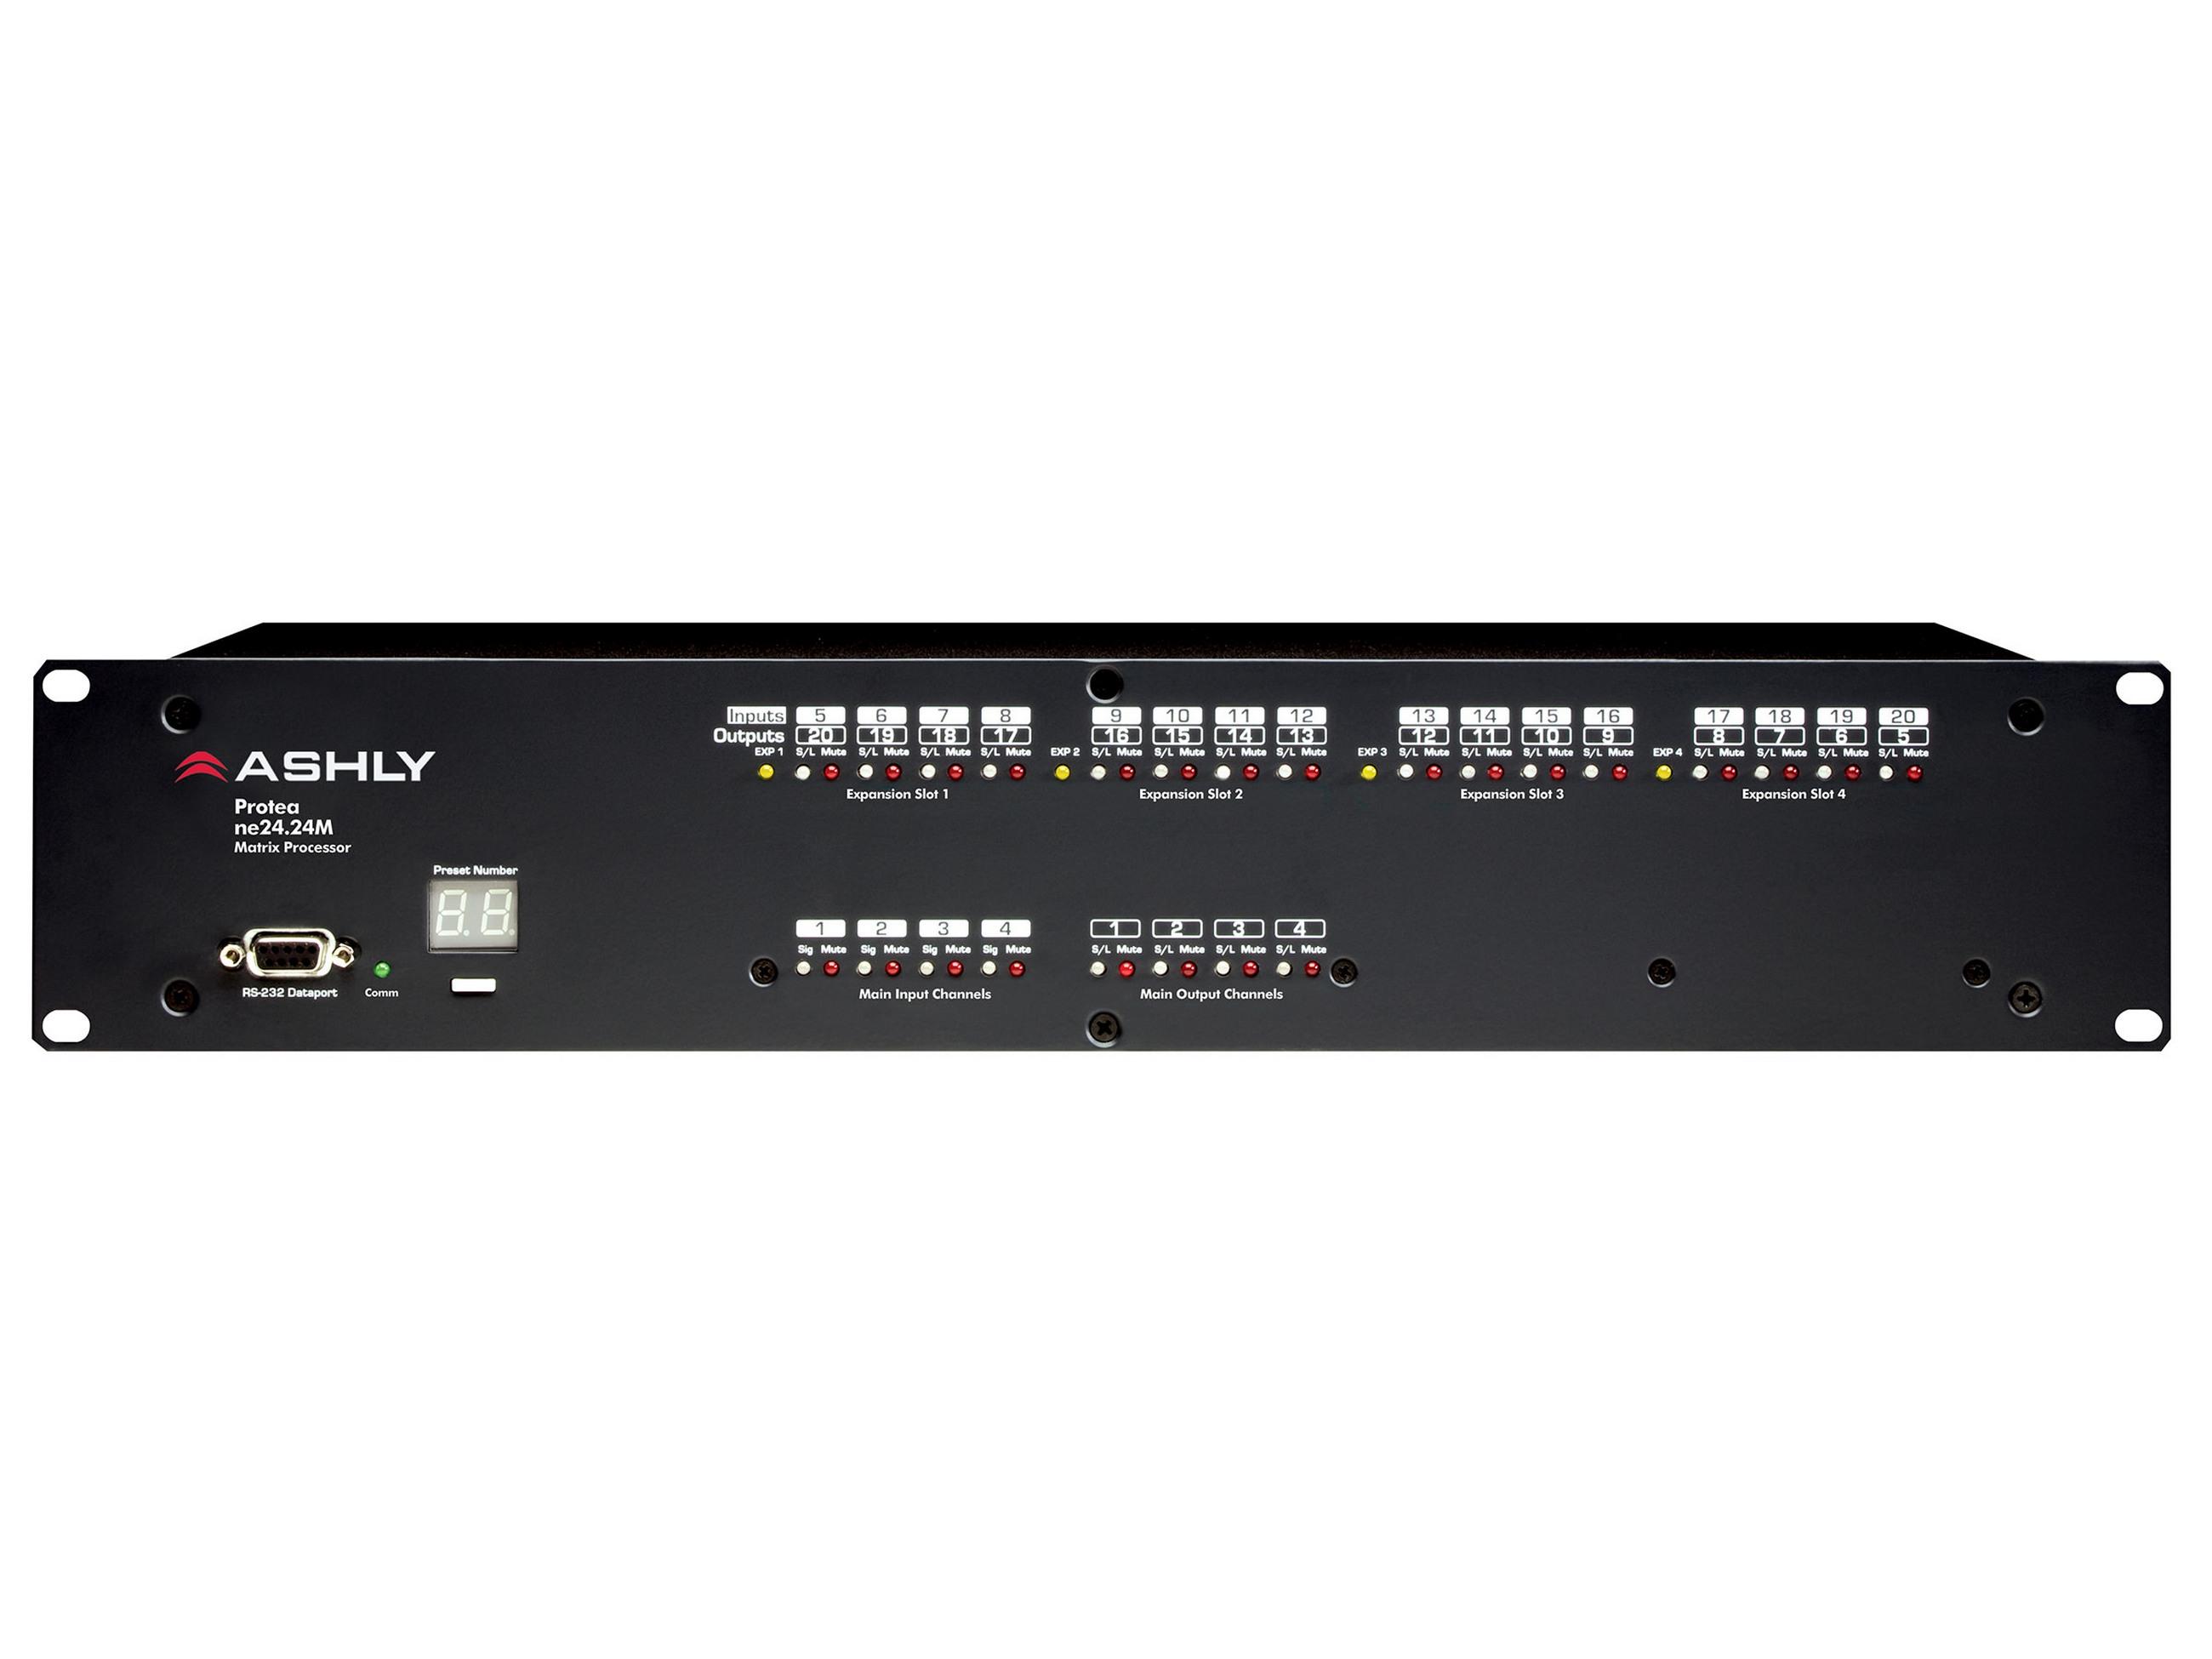 ne24.24M 20x4 20x4 Protea DSP Audio Matrix Switch/Processor by Ashly